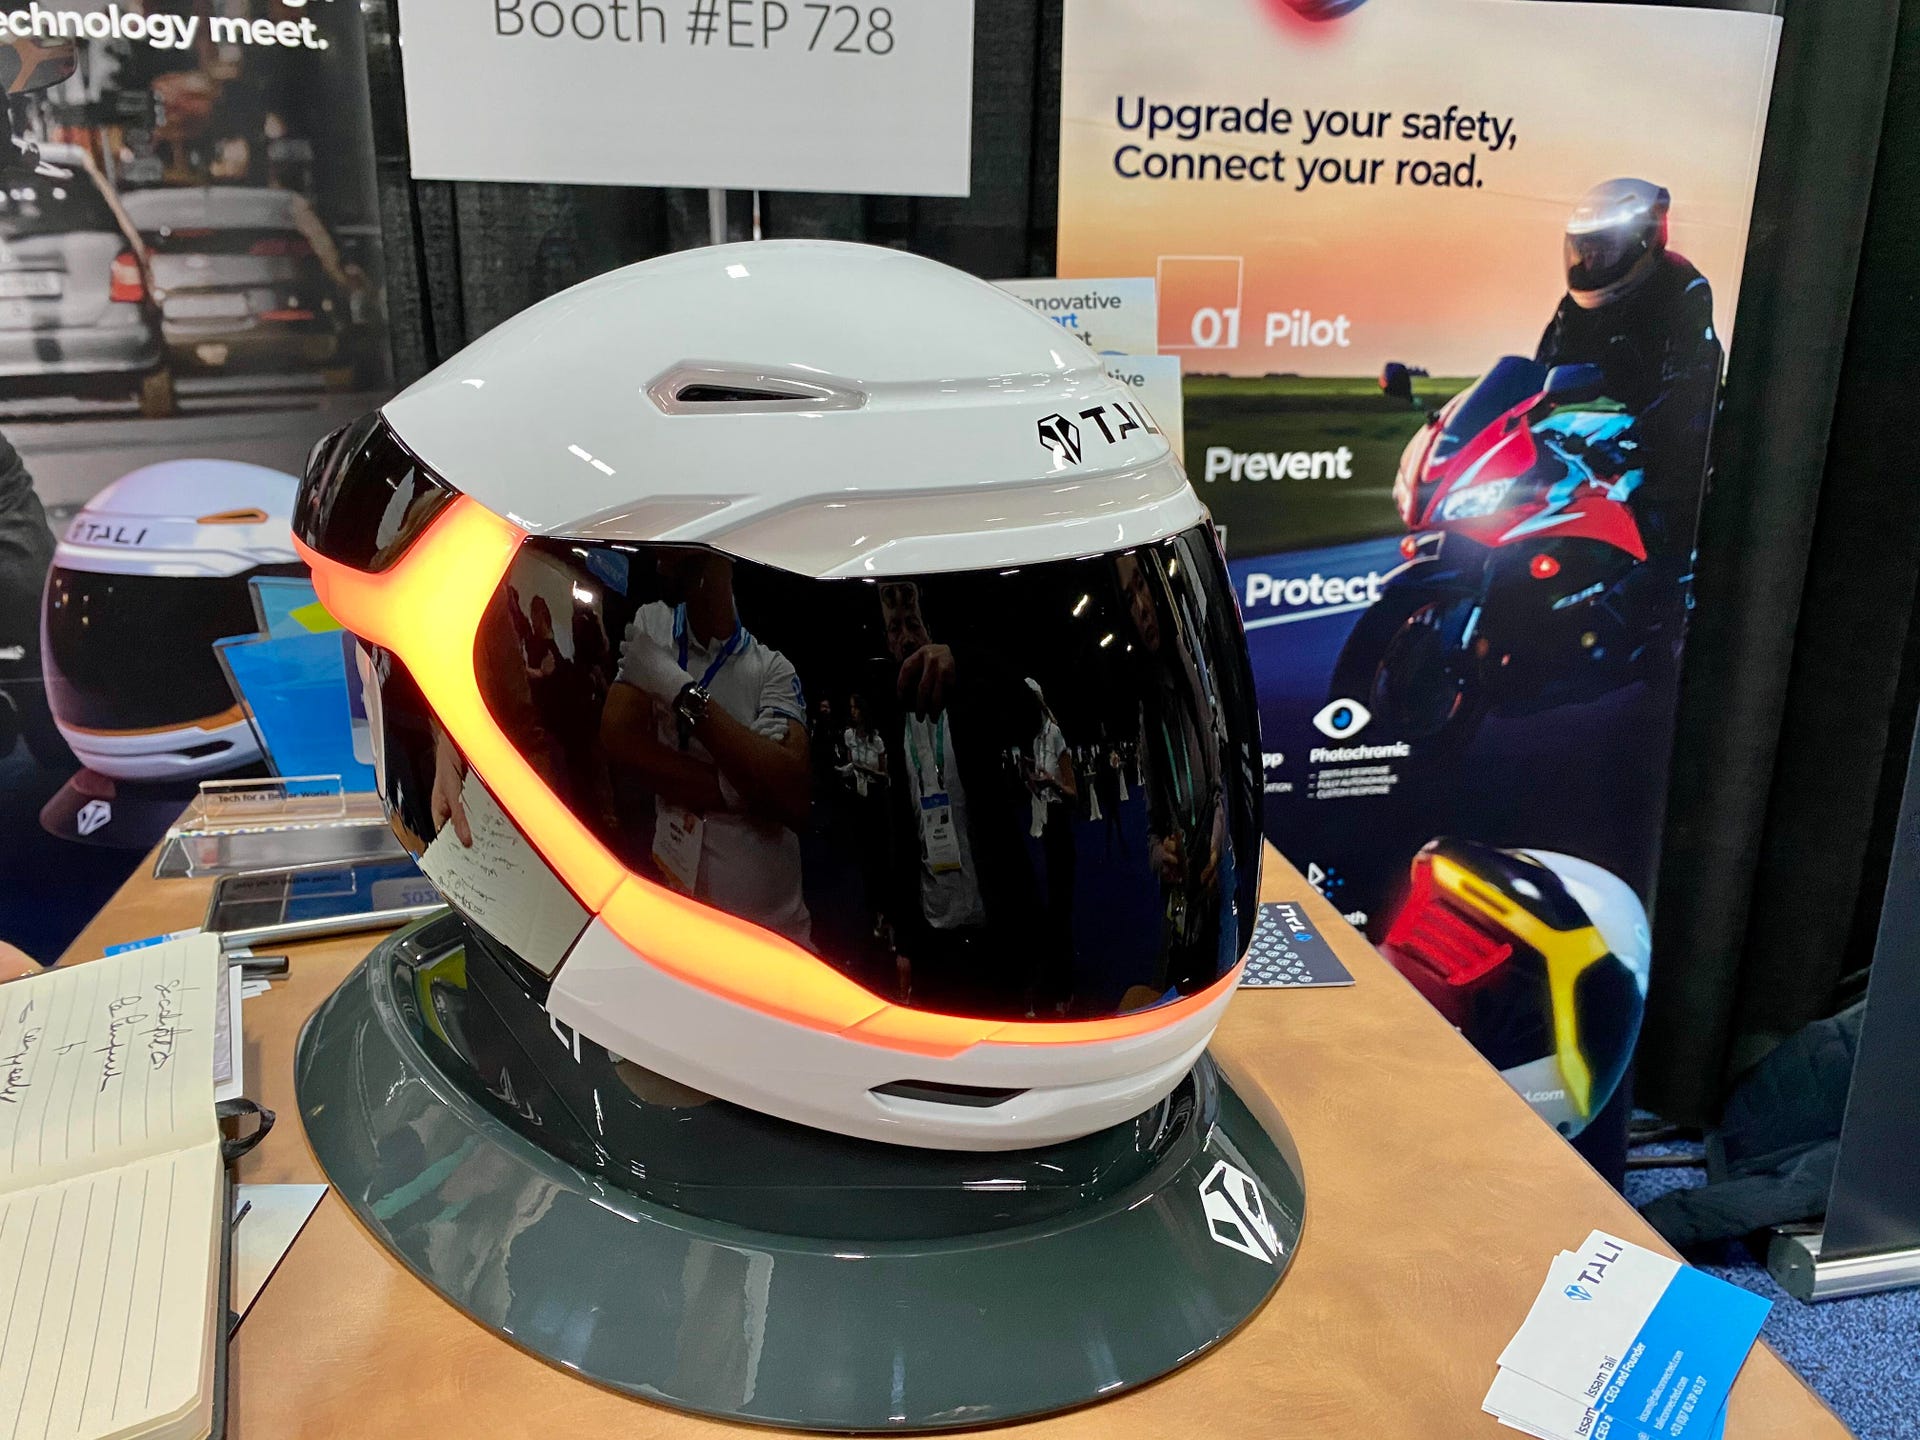 Tali smart motorcycle helmet